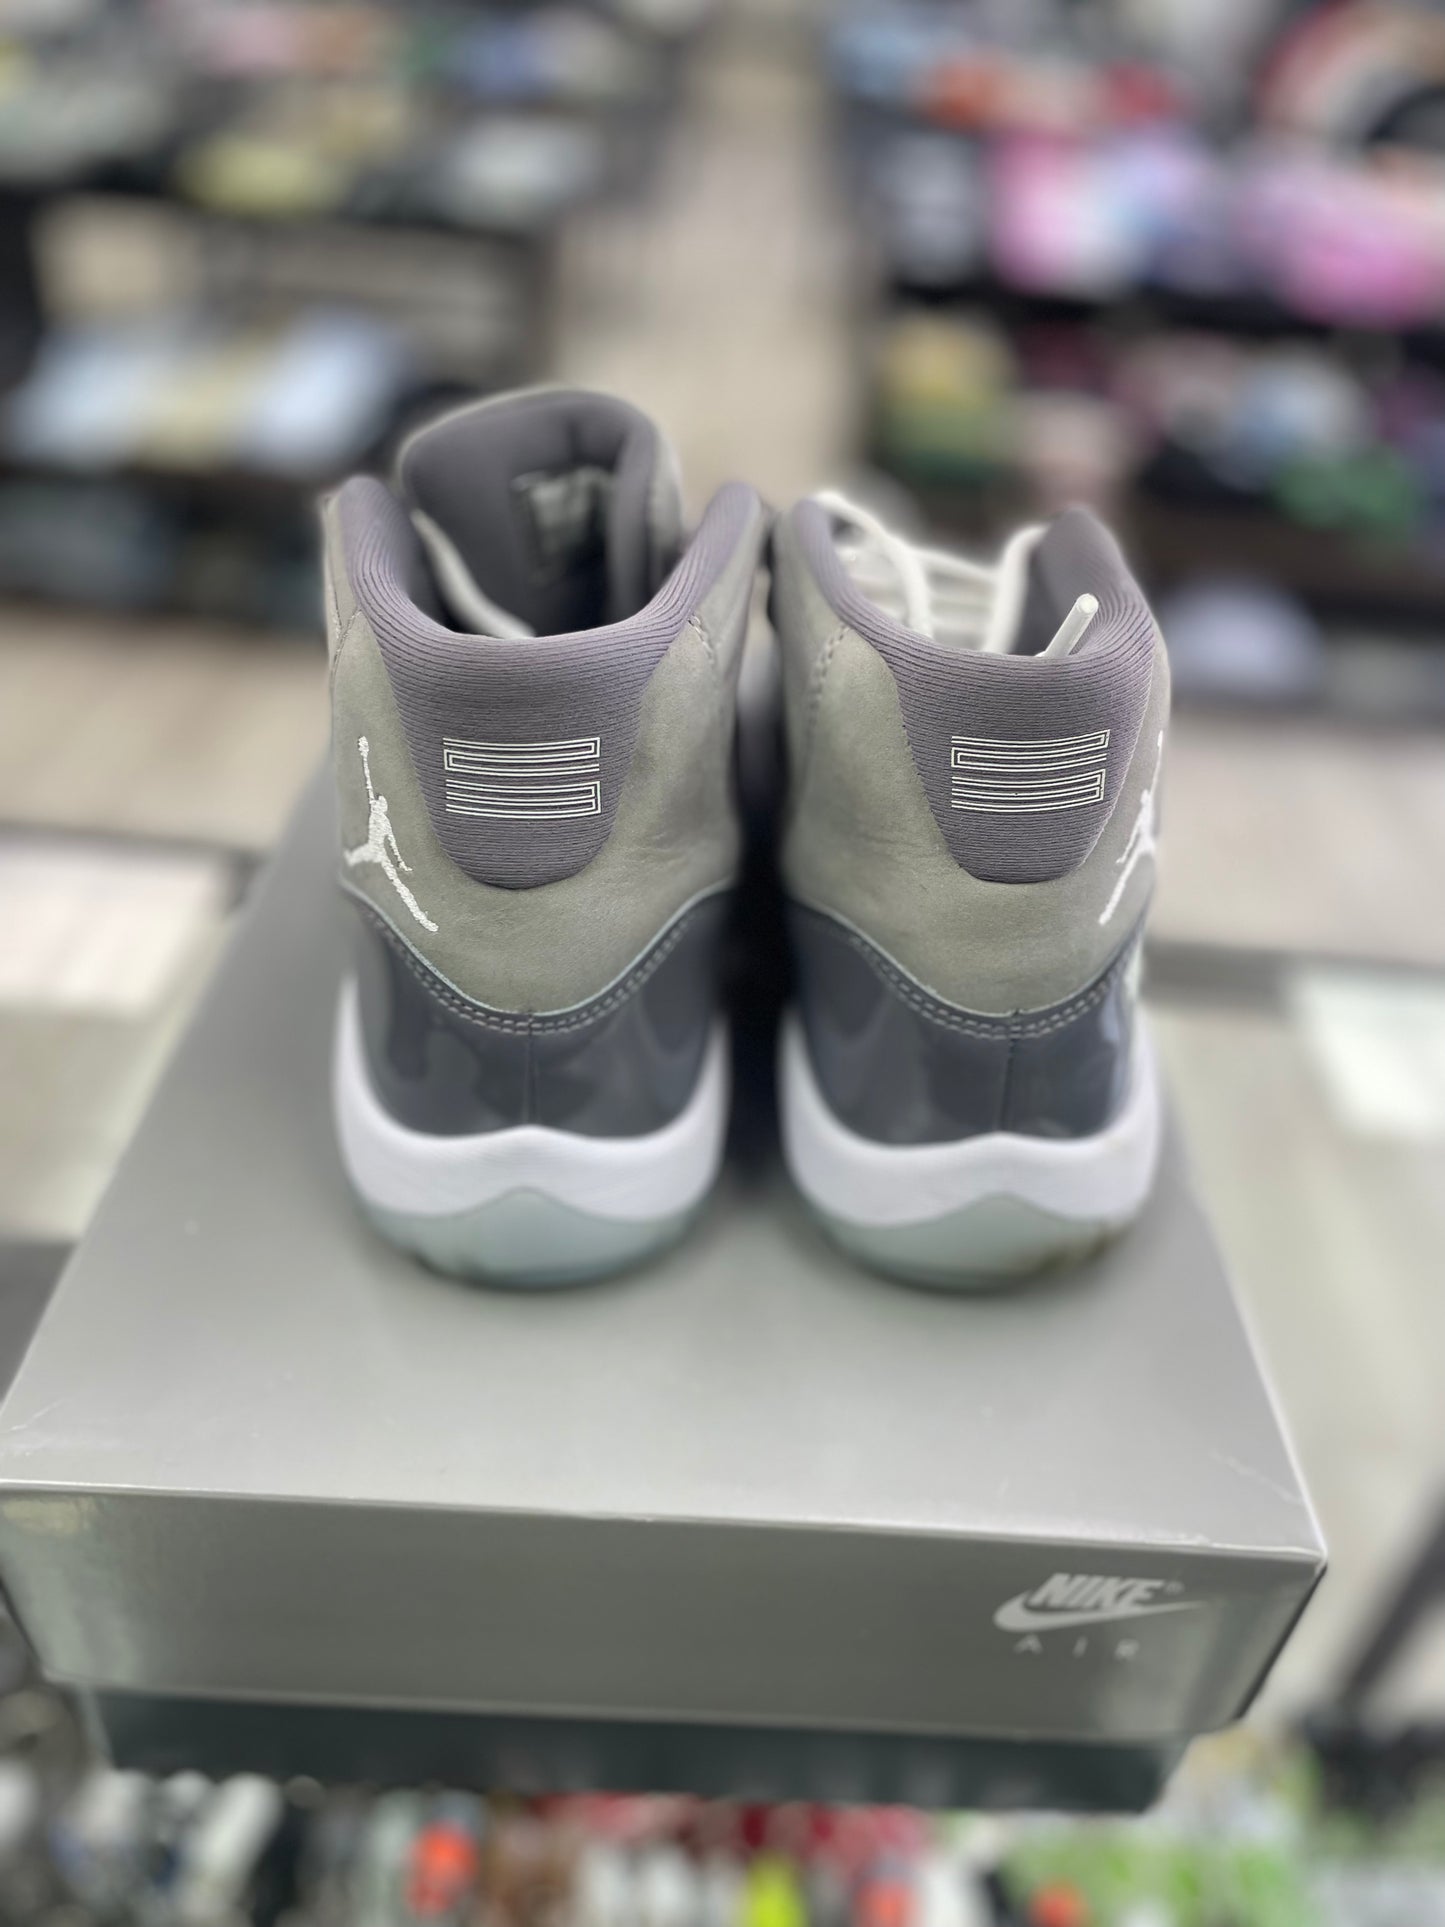 Air Jordan Retro 11 "Cool Grey" *Size 7.5 Preowned*